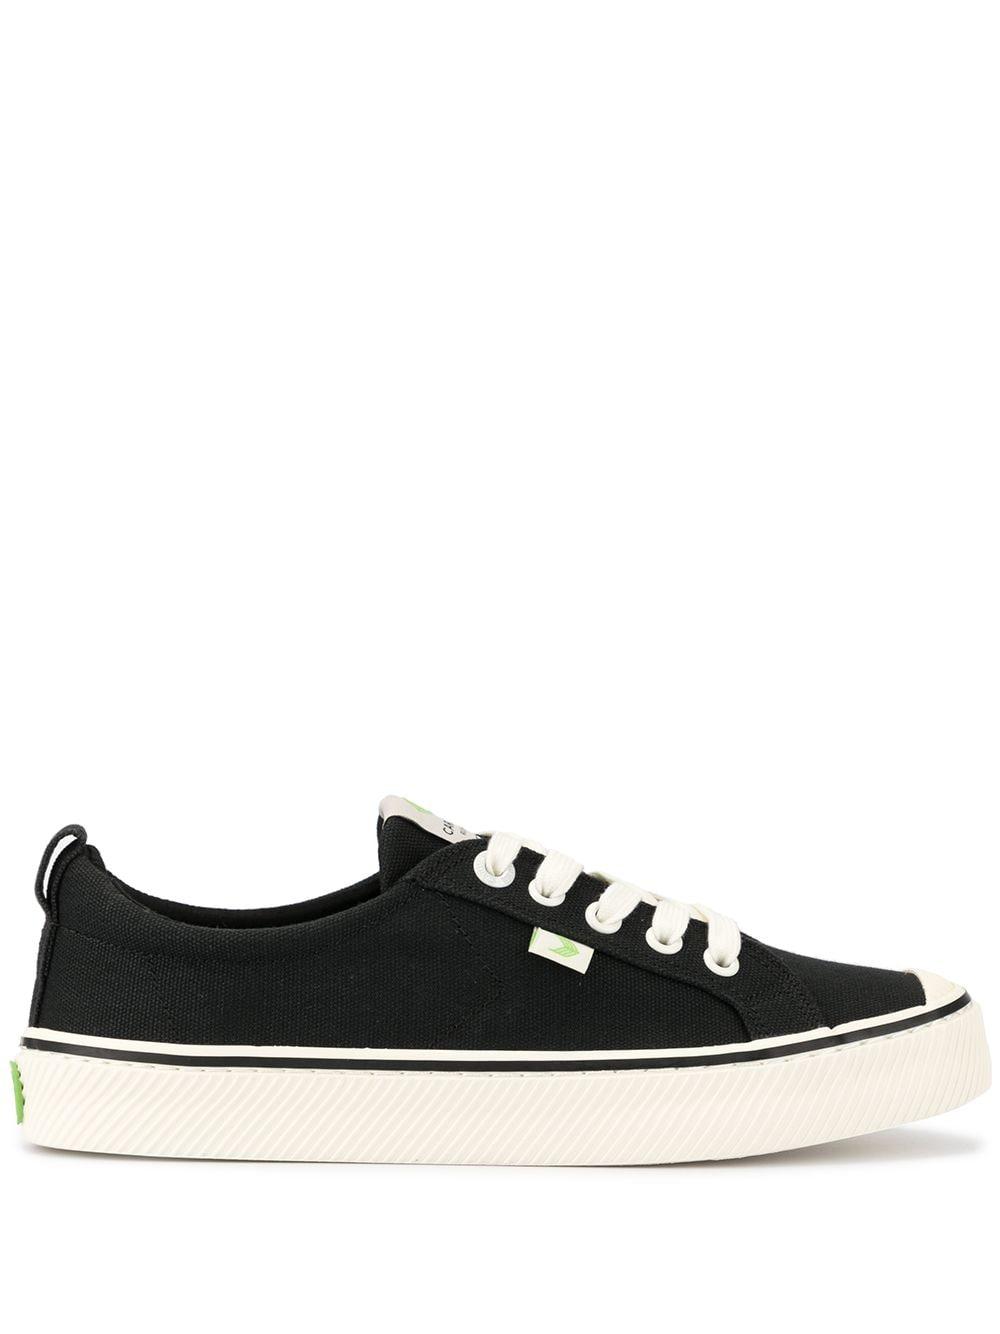 CARIUMA Oca Low Stripe Black Canvas Sneaker - Lyst